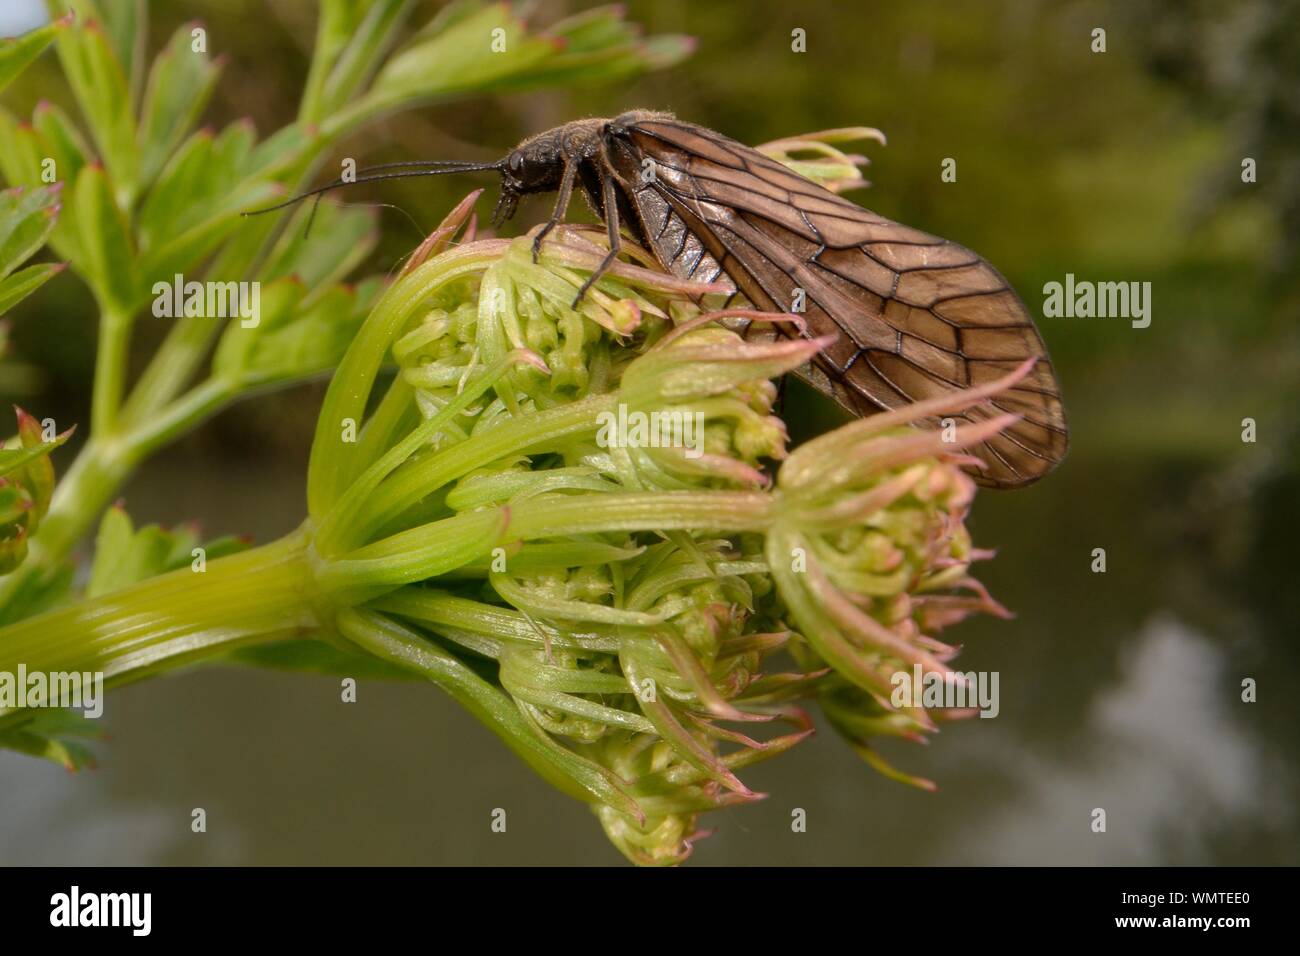 Erle fliegen (Sialis sp.) ruht auf Riverside Dolde flowerbuds, Wiltshire, UK, Mai. Stockfoto